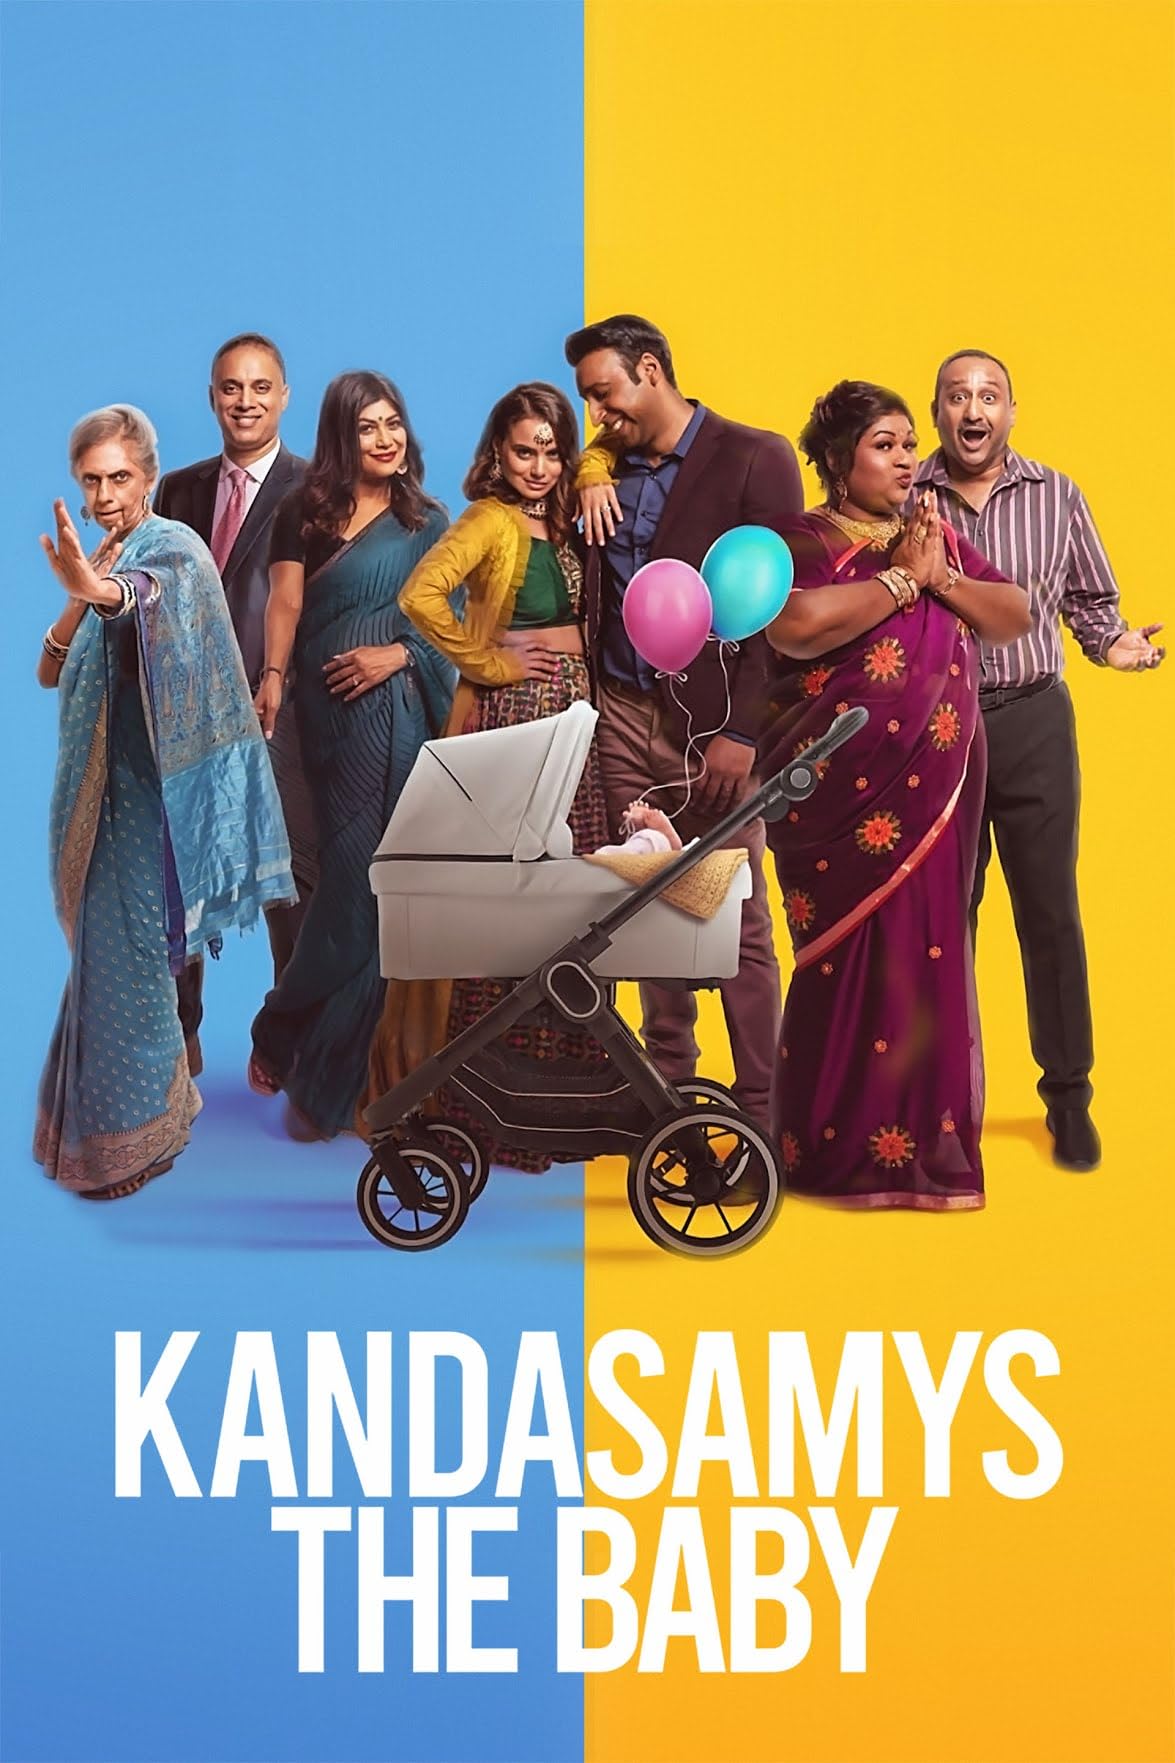 فيلم Kandasamys: The Baby 2023 مترجم